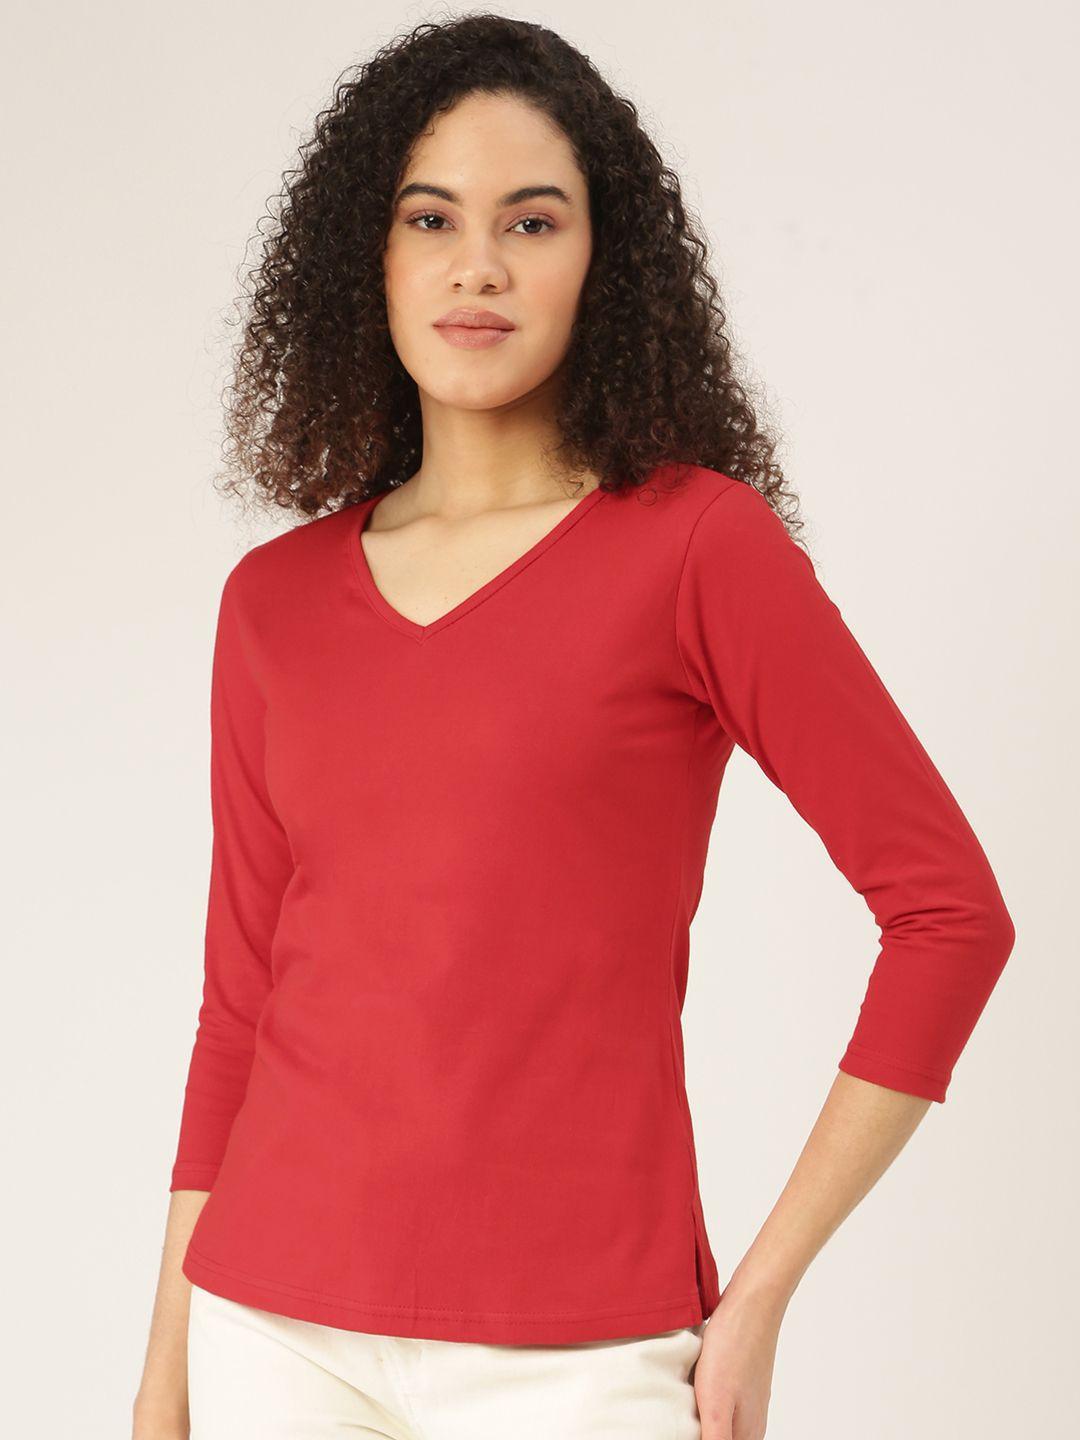 brinns-women-red-v-neck-t-shirt